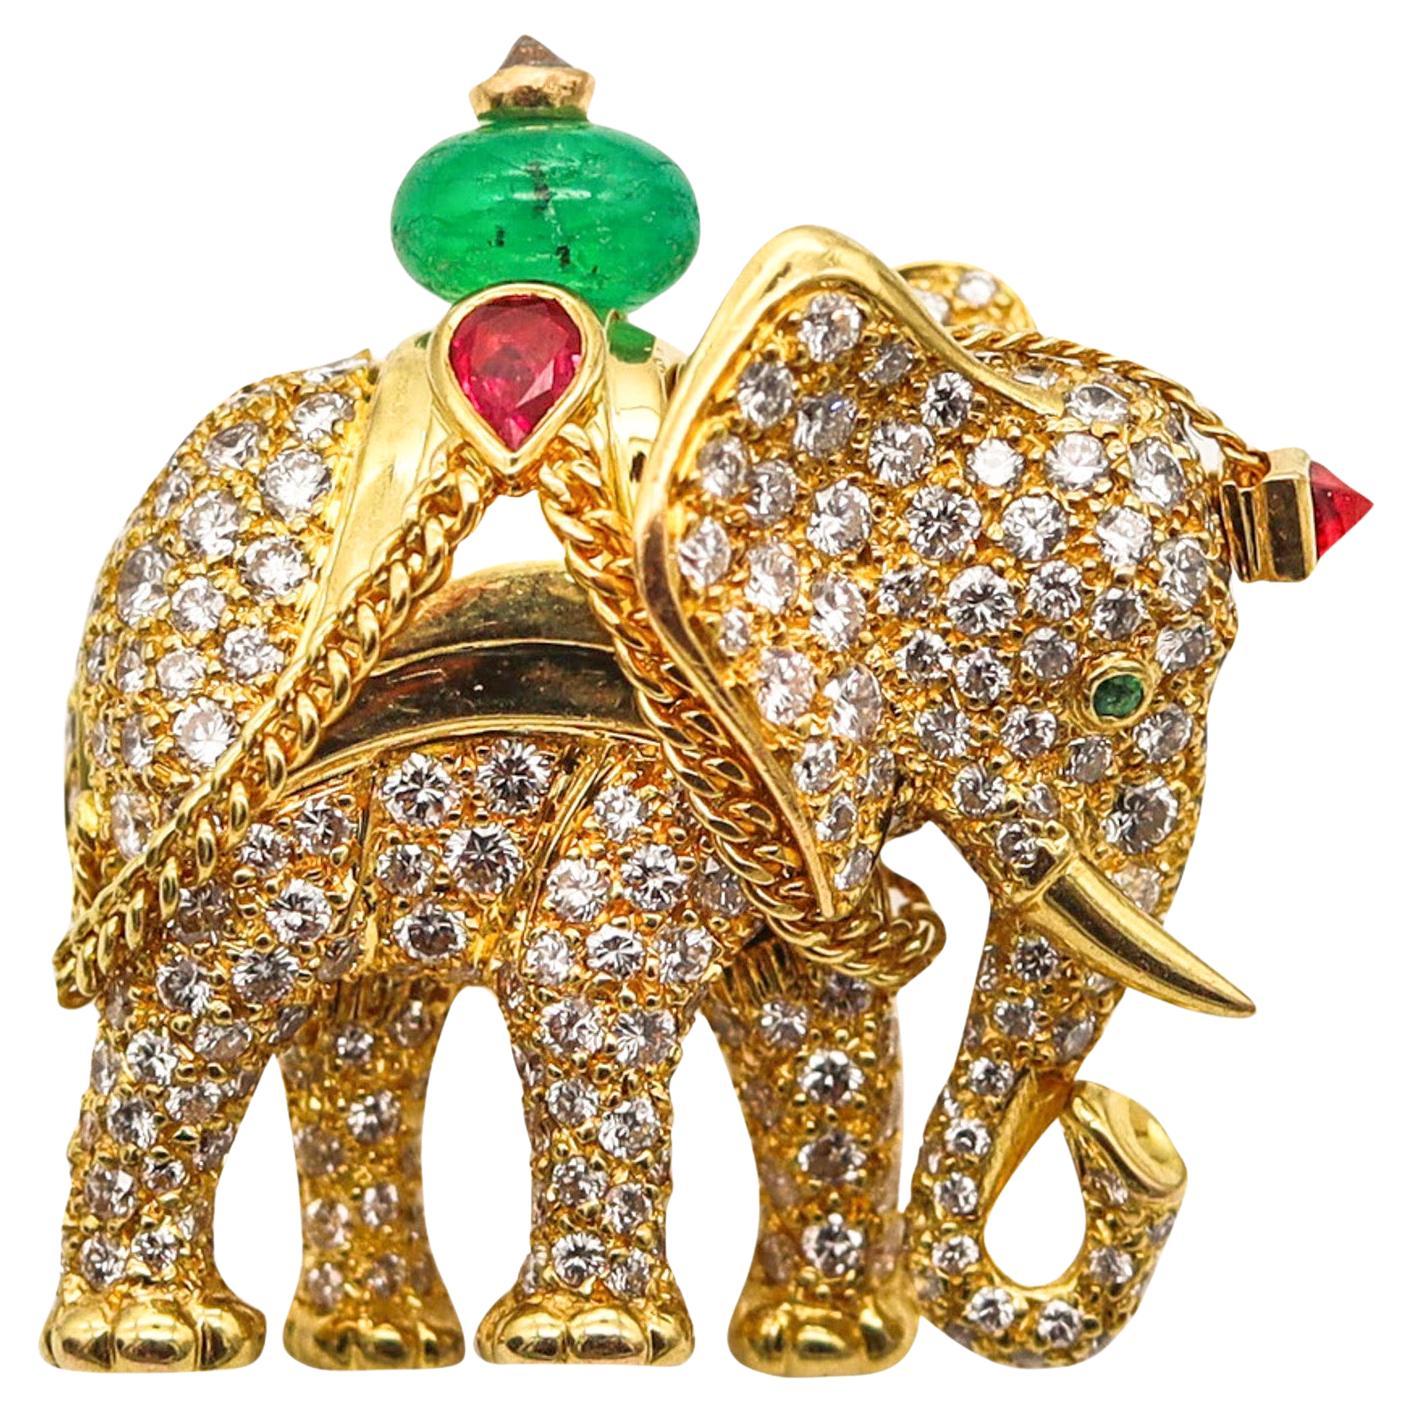 Cartier Paris Elefantenbrosche 18Kt Gold mit 5,24 Karat Diamanten, Smaragden und Rubinen